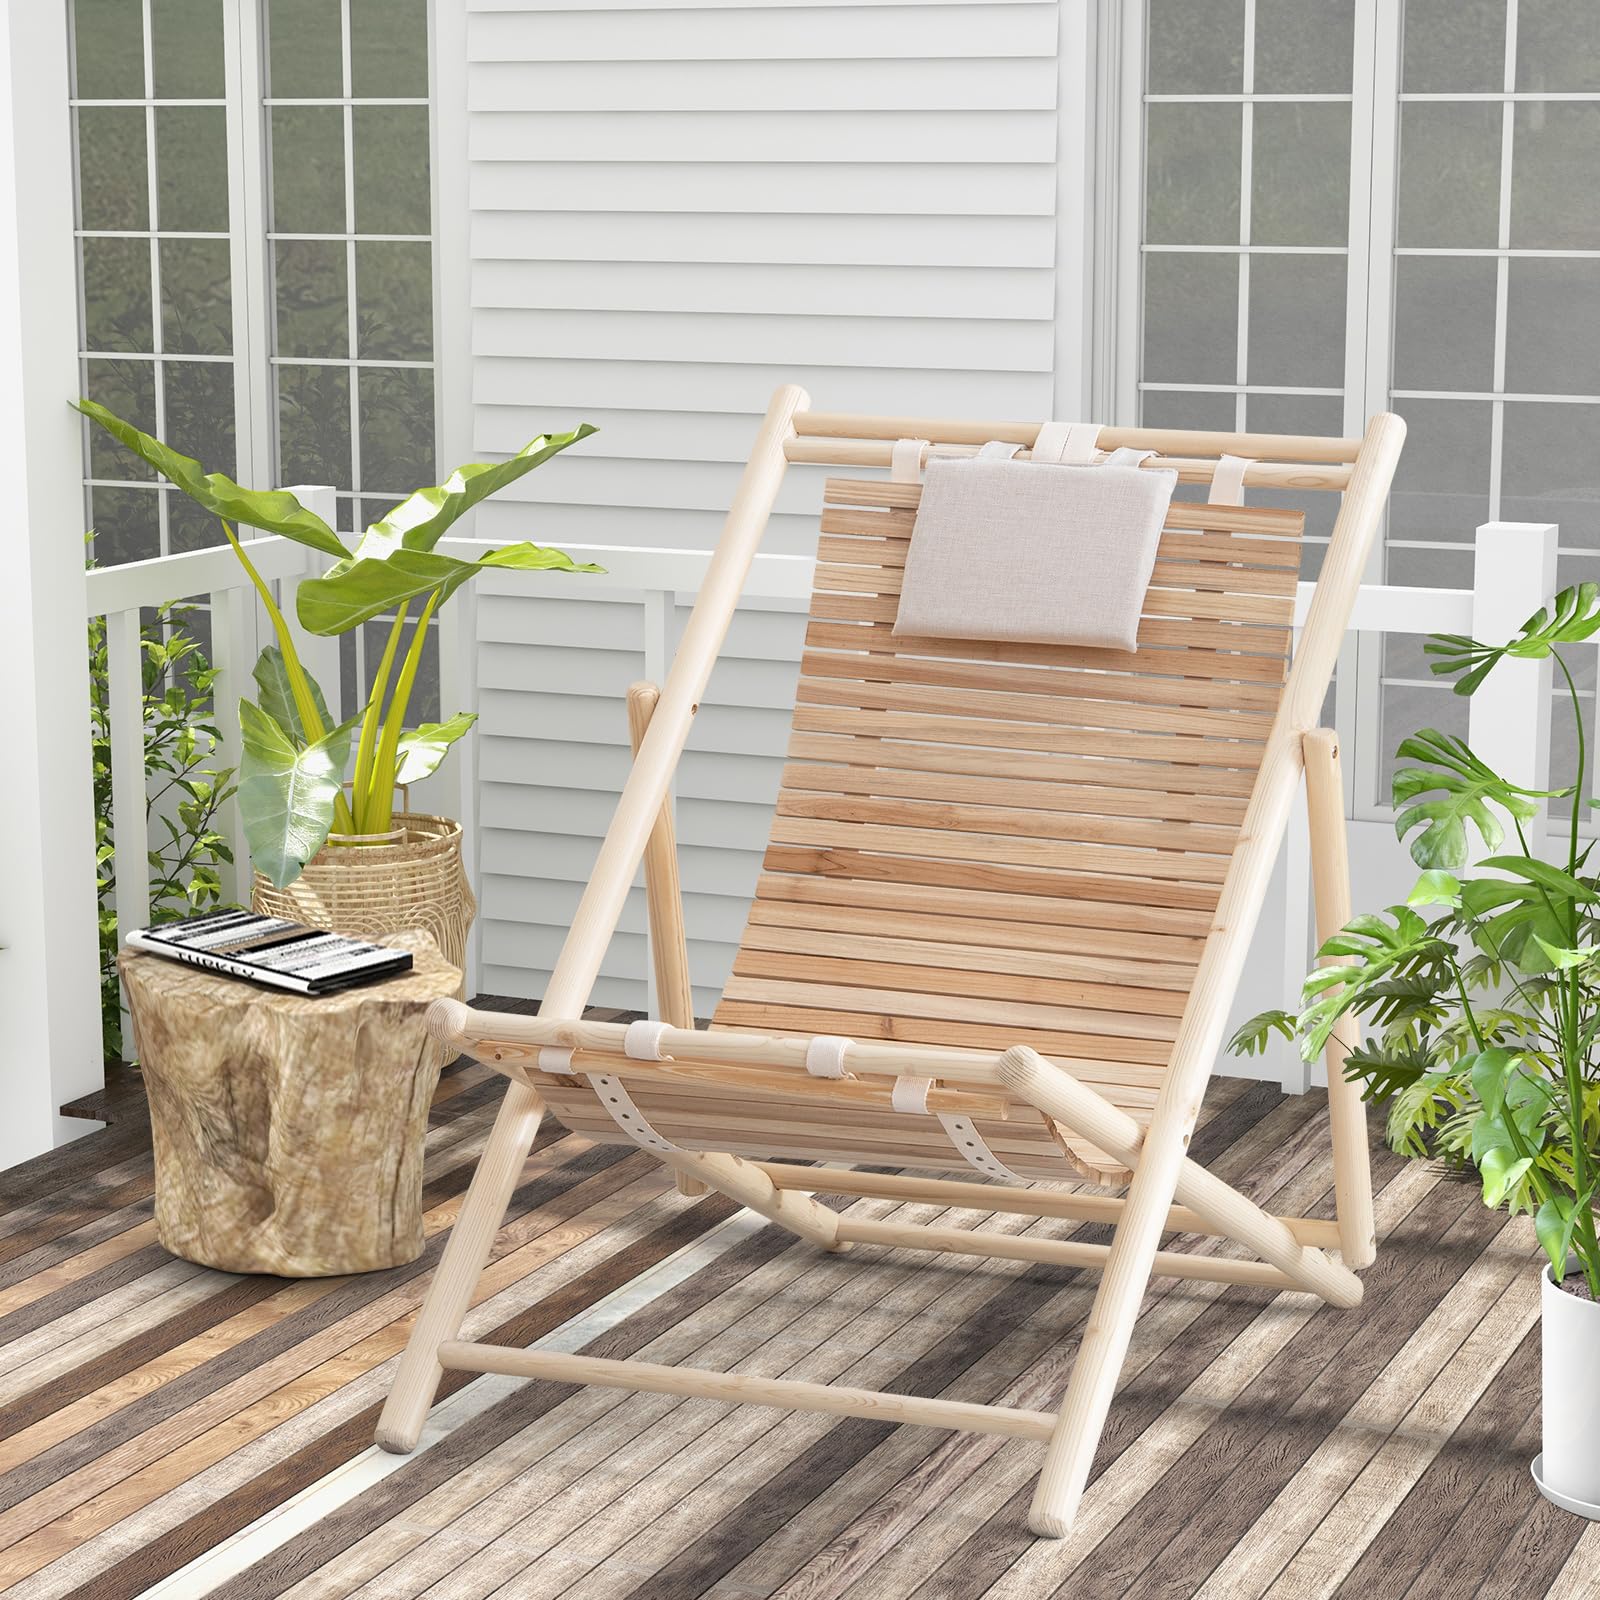 Giantex Wood Lounge Chair Outdoor - Folding Beach Chair with Detachable Headrest